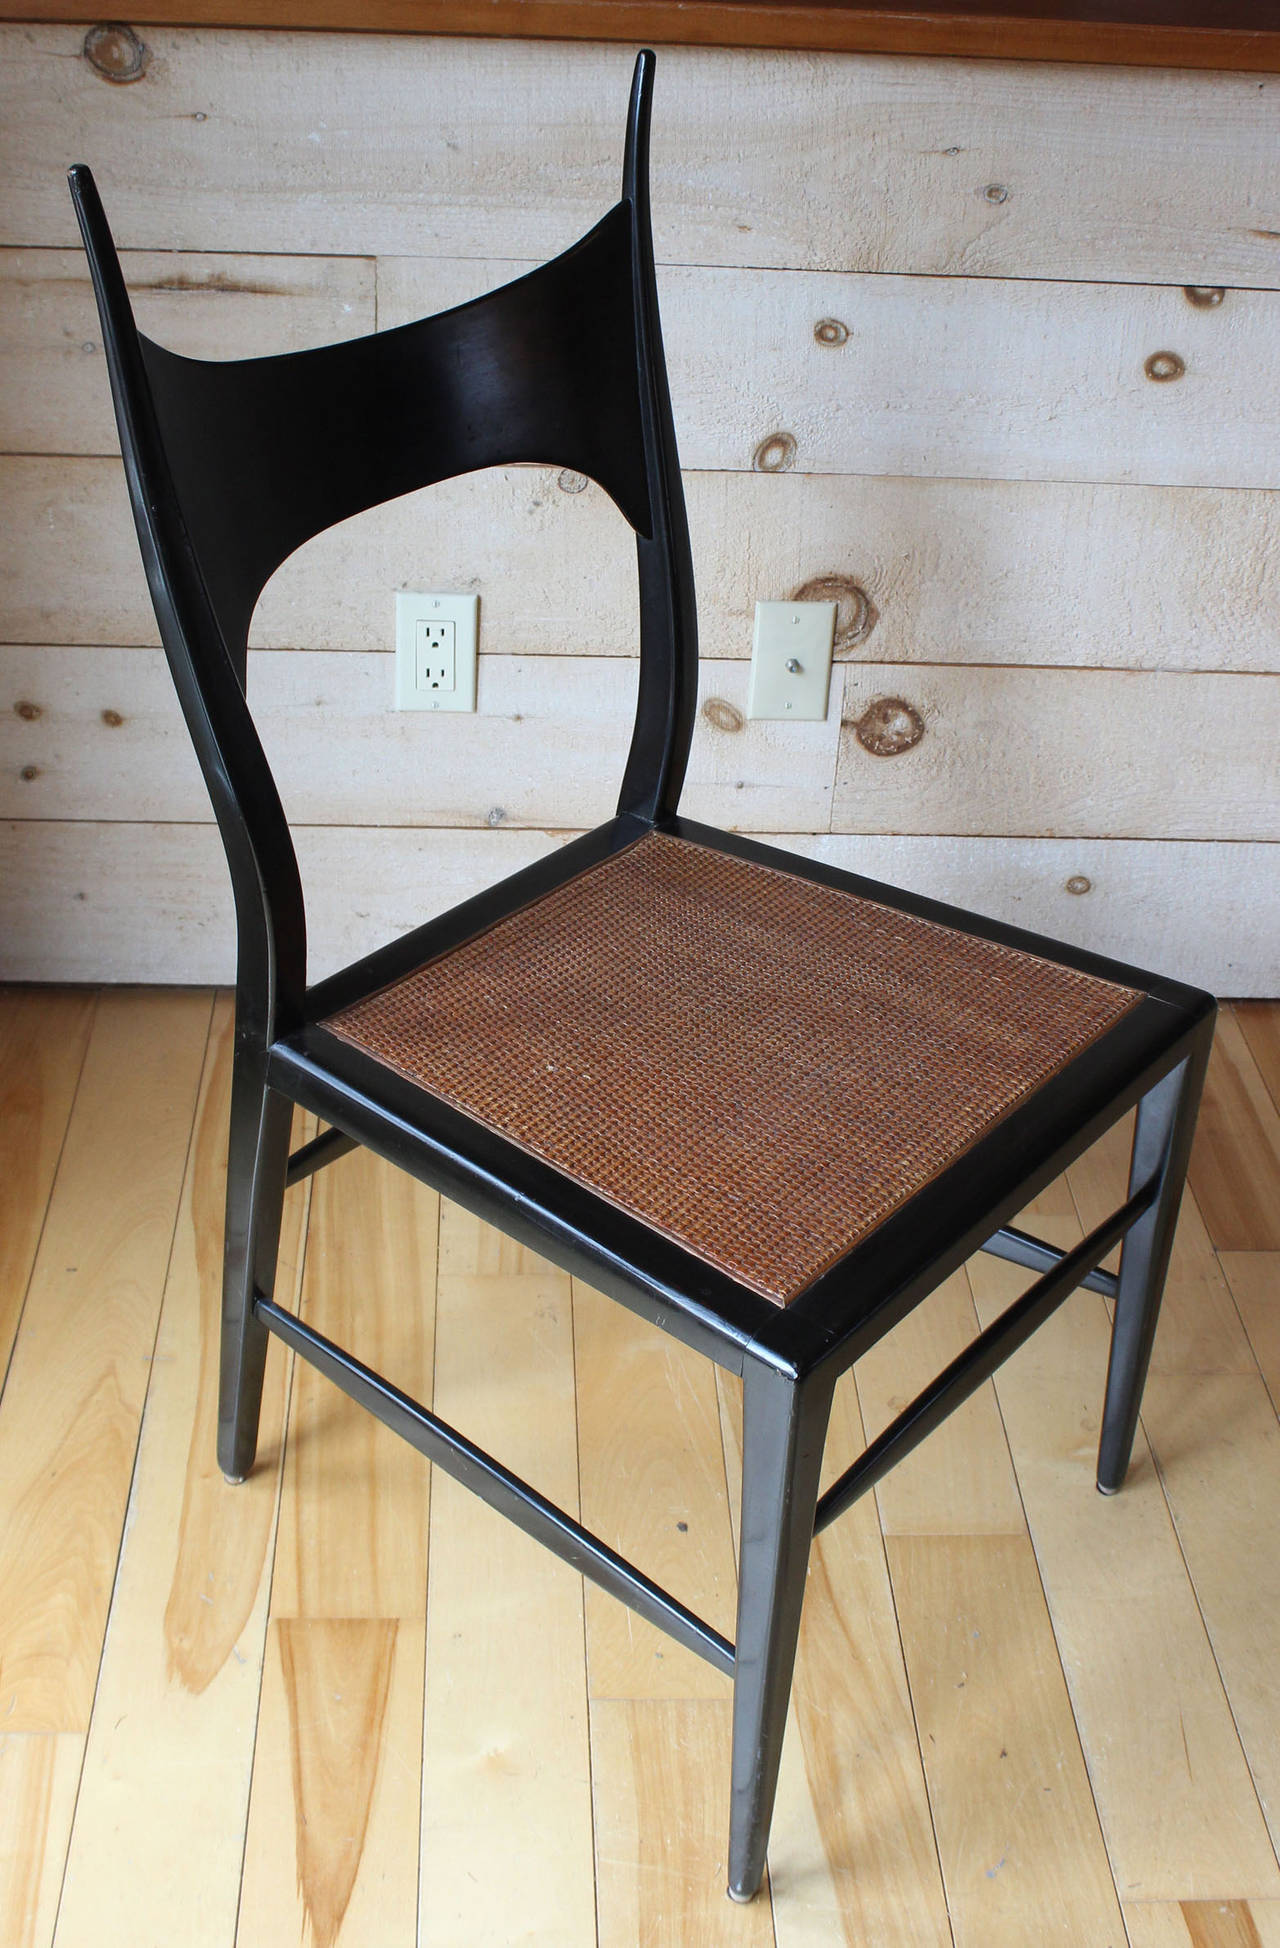 Antler chair model 5580, designed by Edward Wormley for Dunbar Furniture.